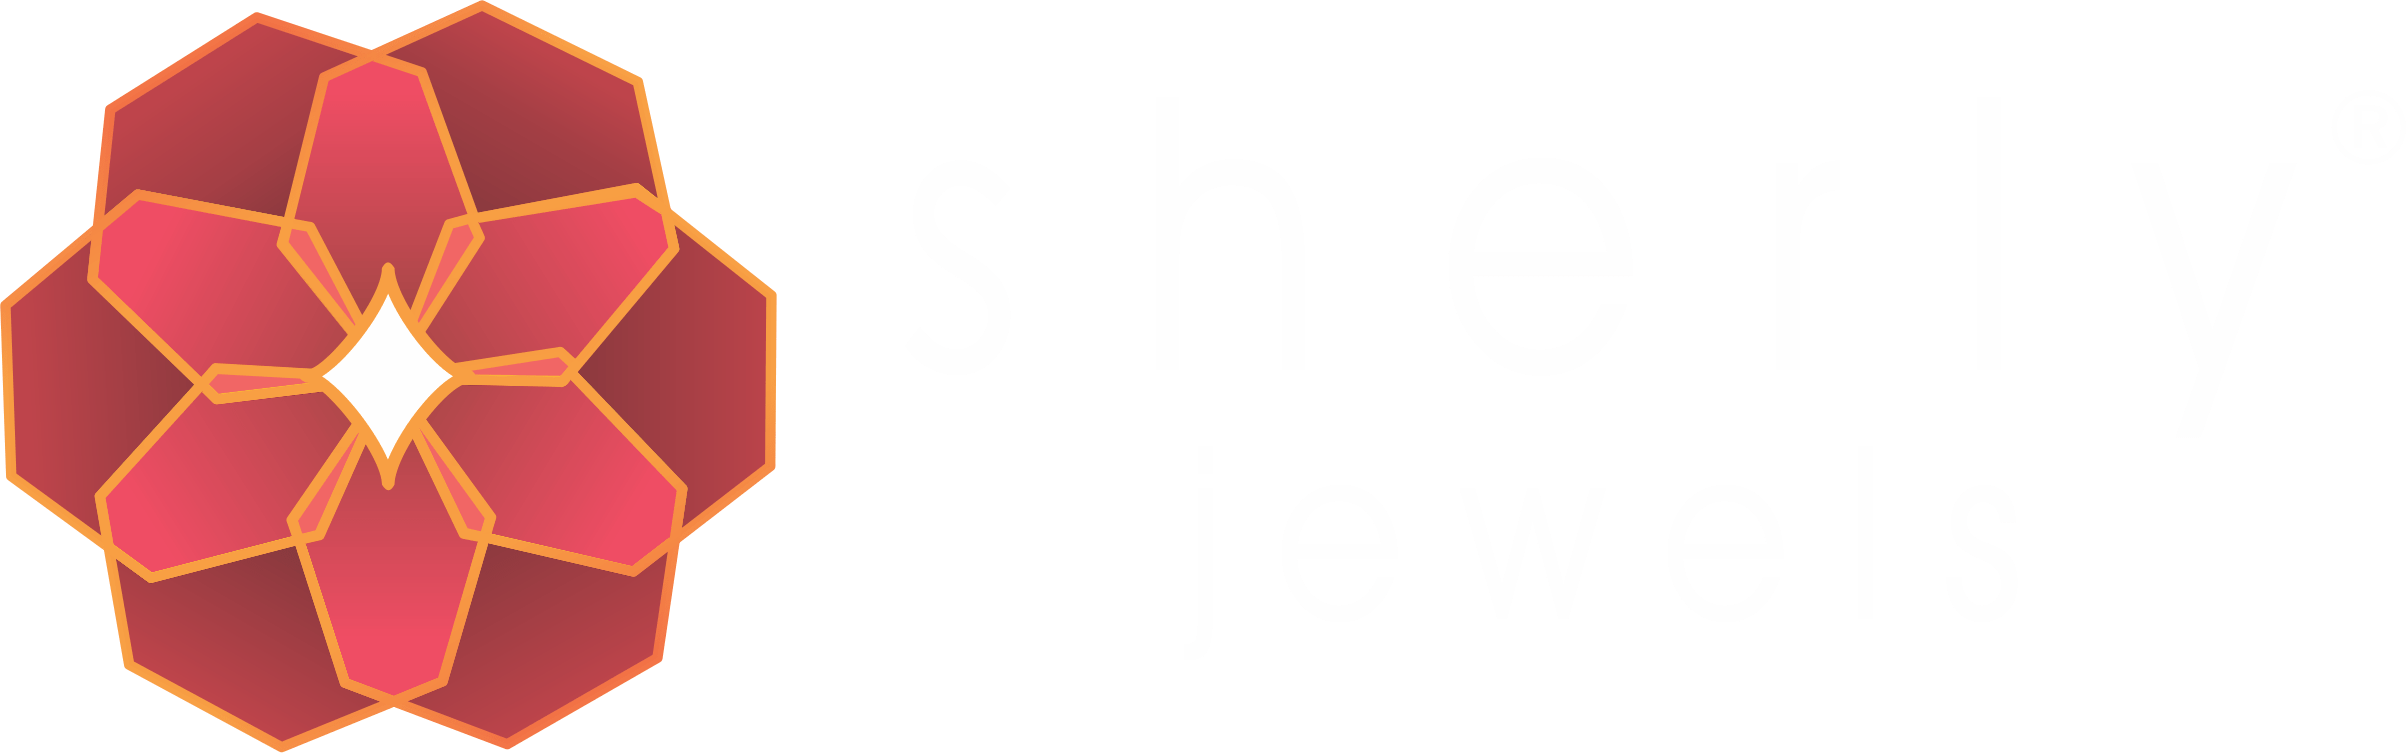 Sherly Jewels - Premium Diamond Jewelry